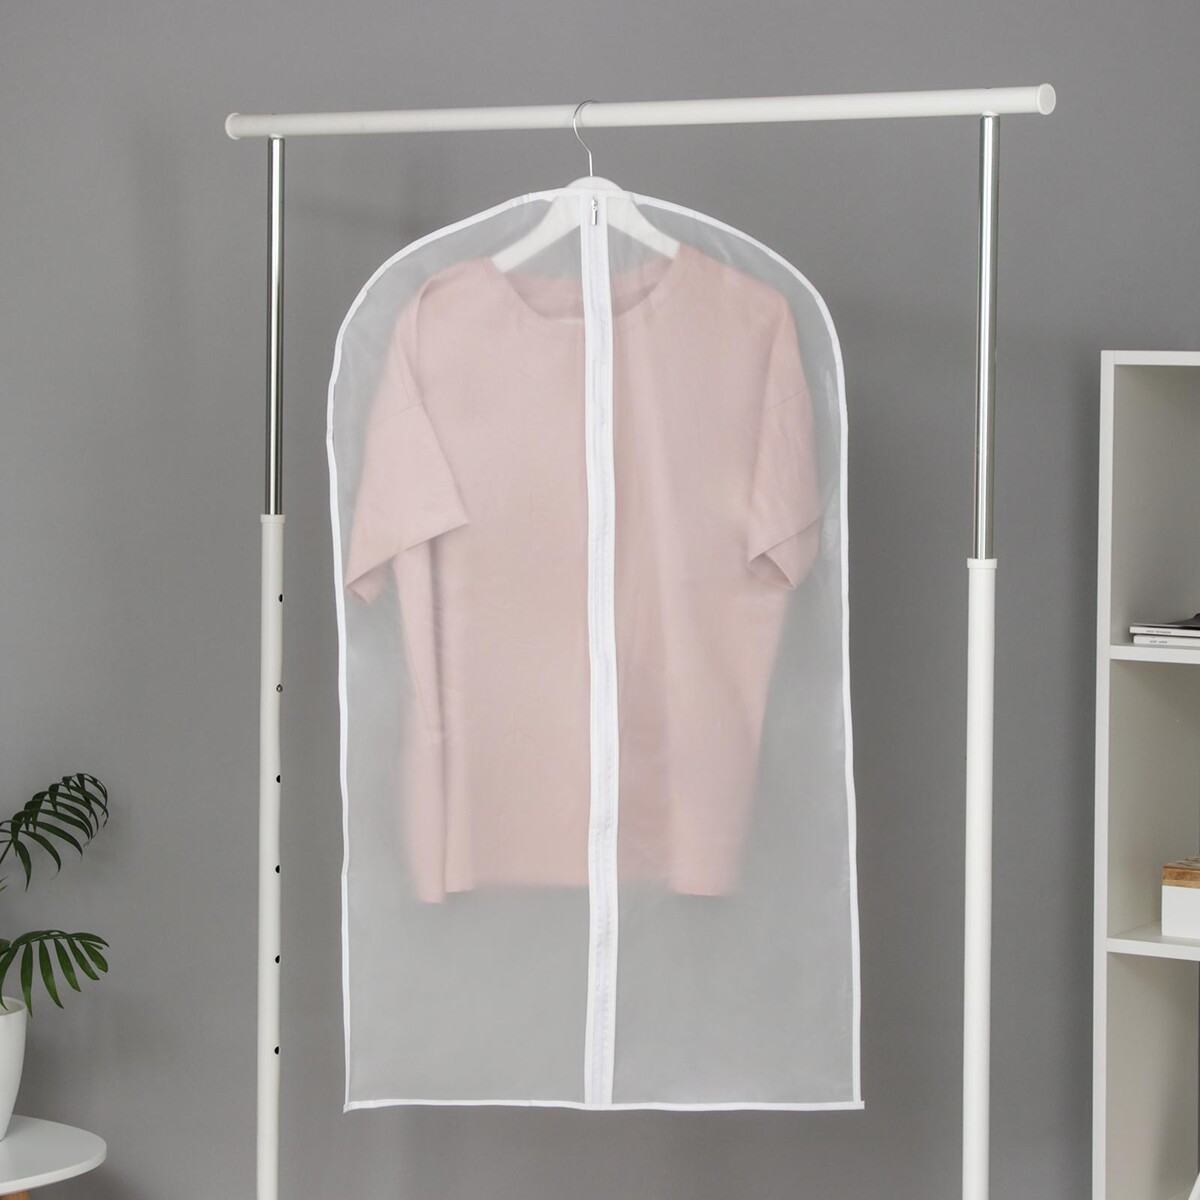 Чехол для одежды плотный доляна, 60×100 см, peva, цвет белый чехол для одежды ladо́m 60×90 см плотный peva серый